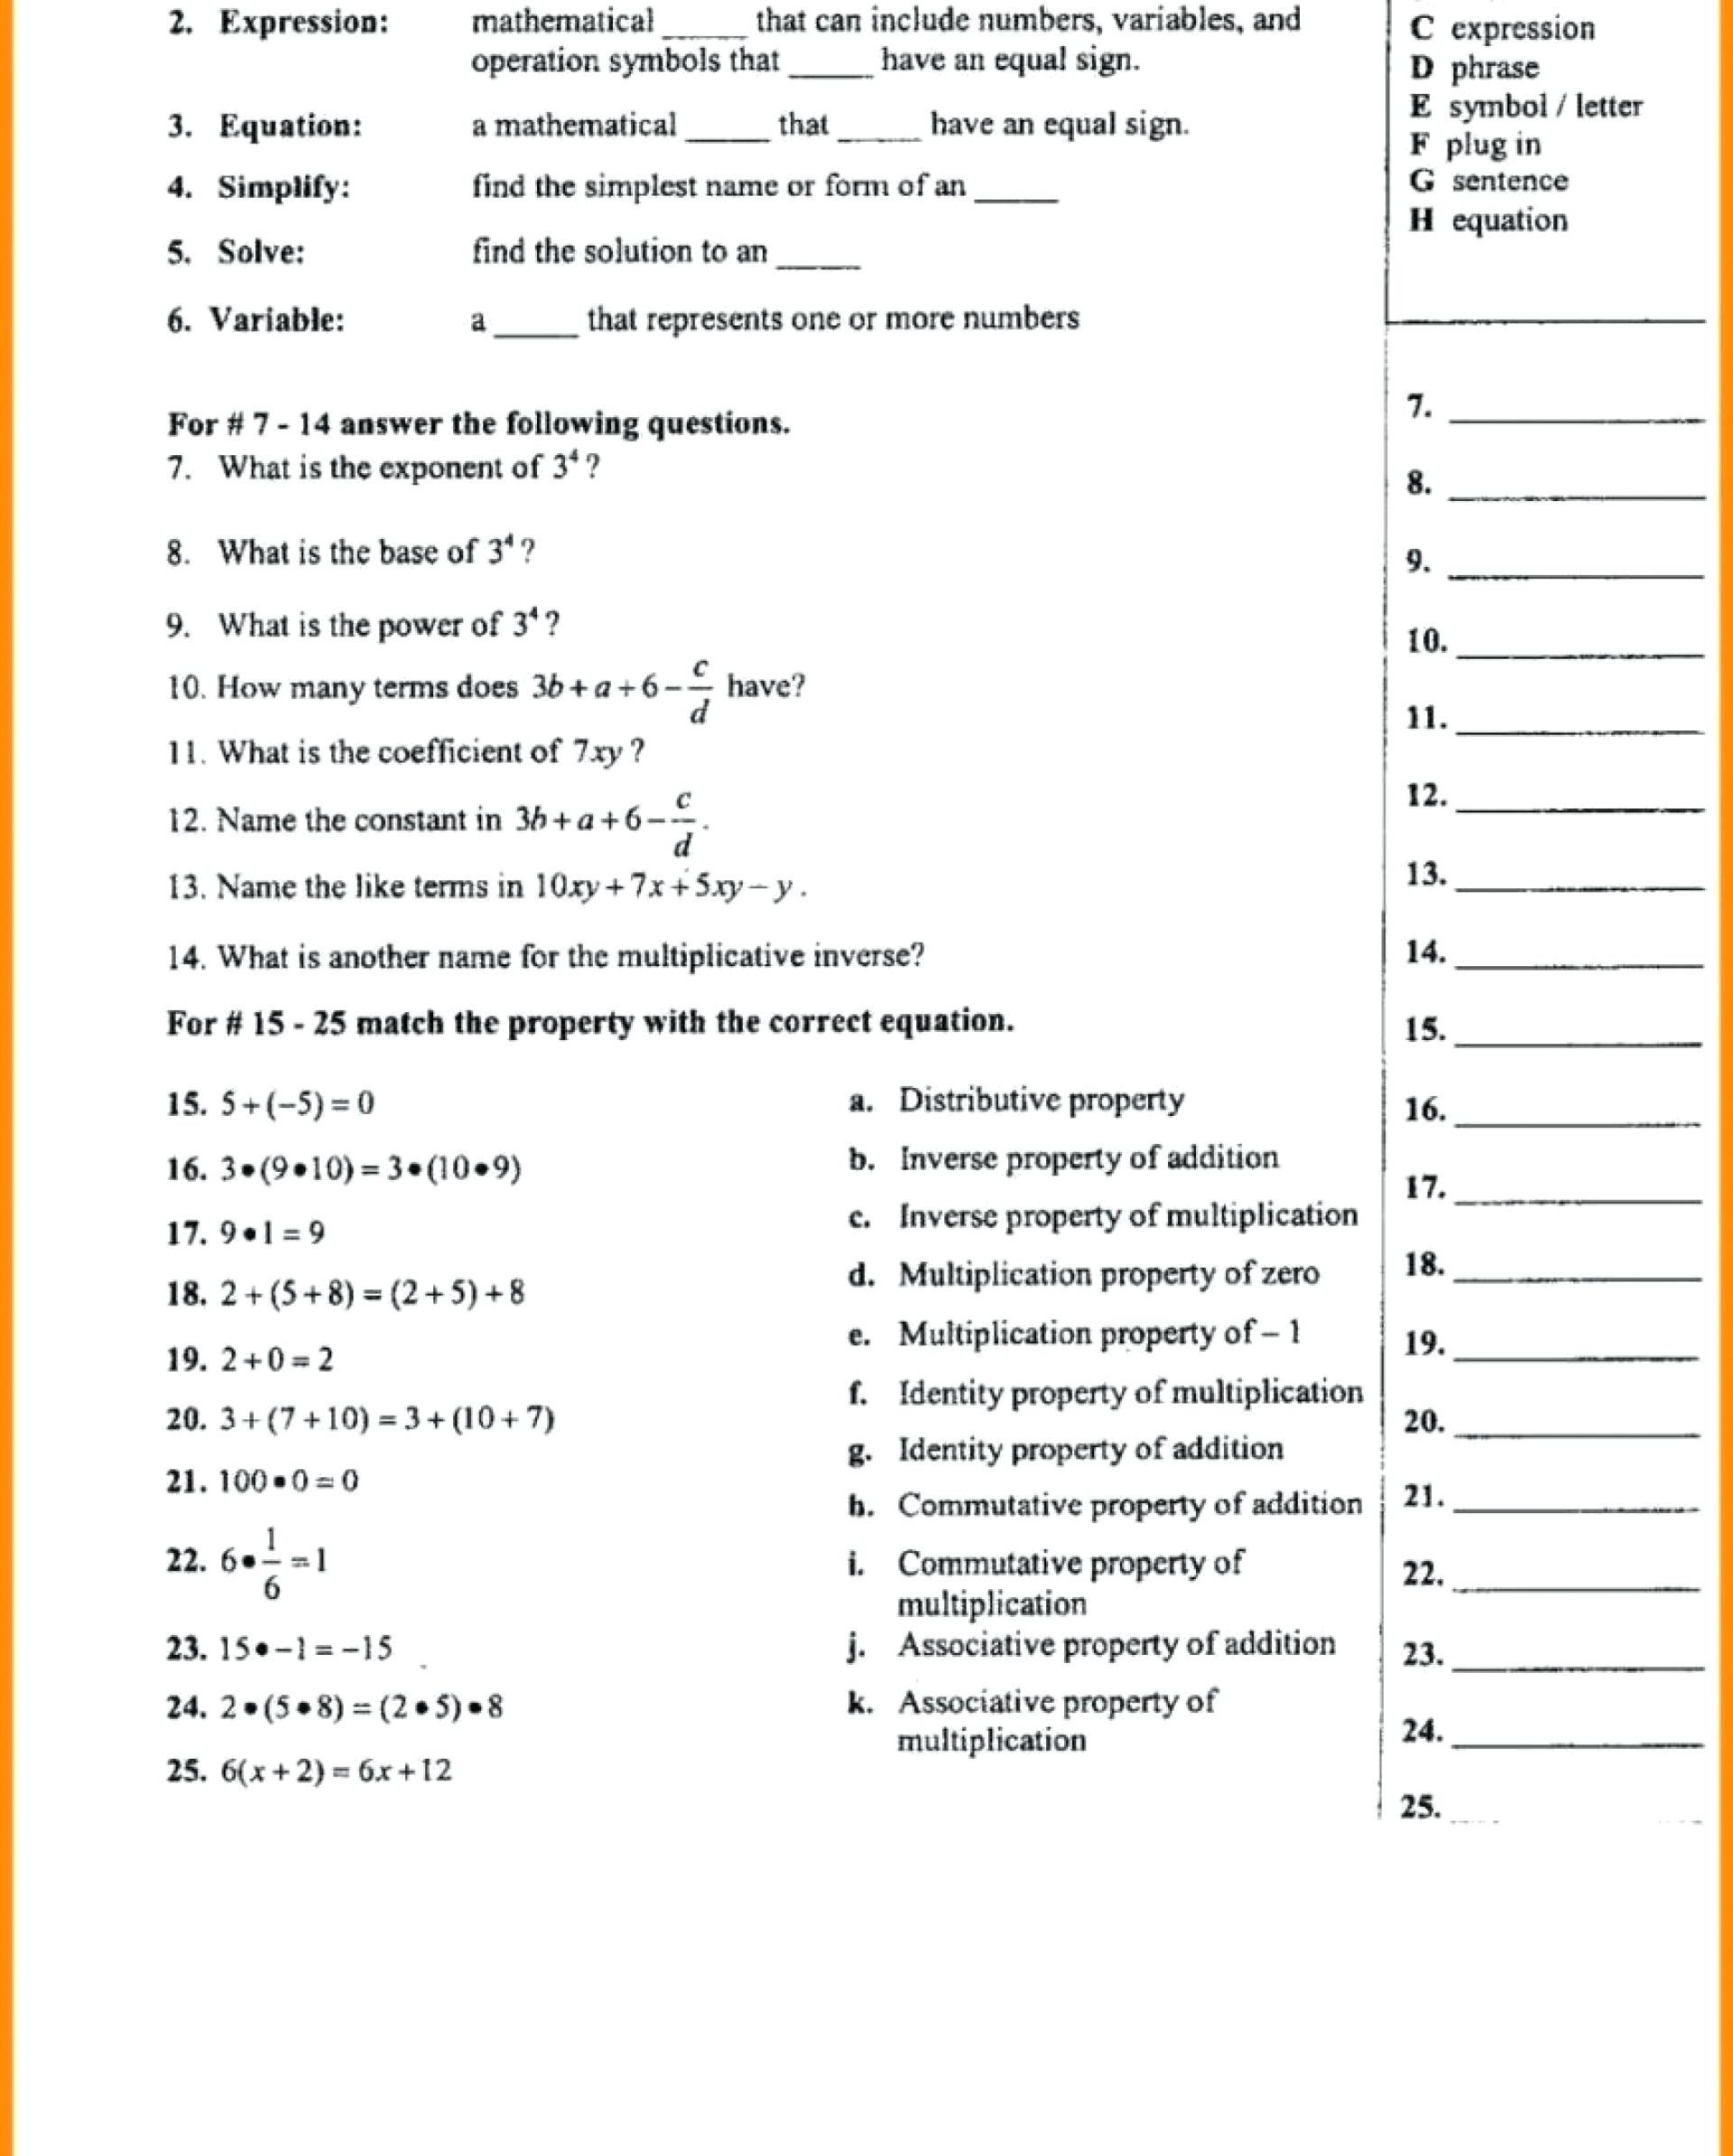 Measuring Worksheets 3rd Grade 4 Free Math Worksheets Third Grade 3 Measurement Metric